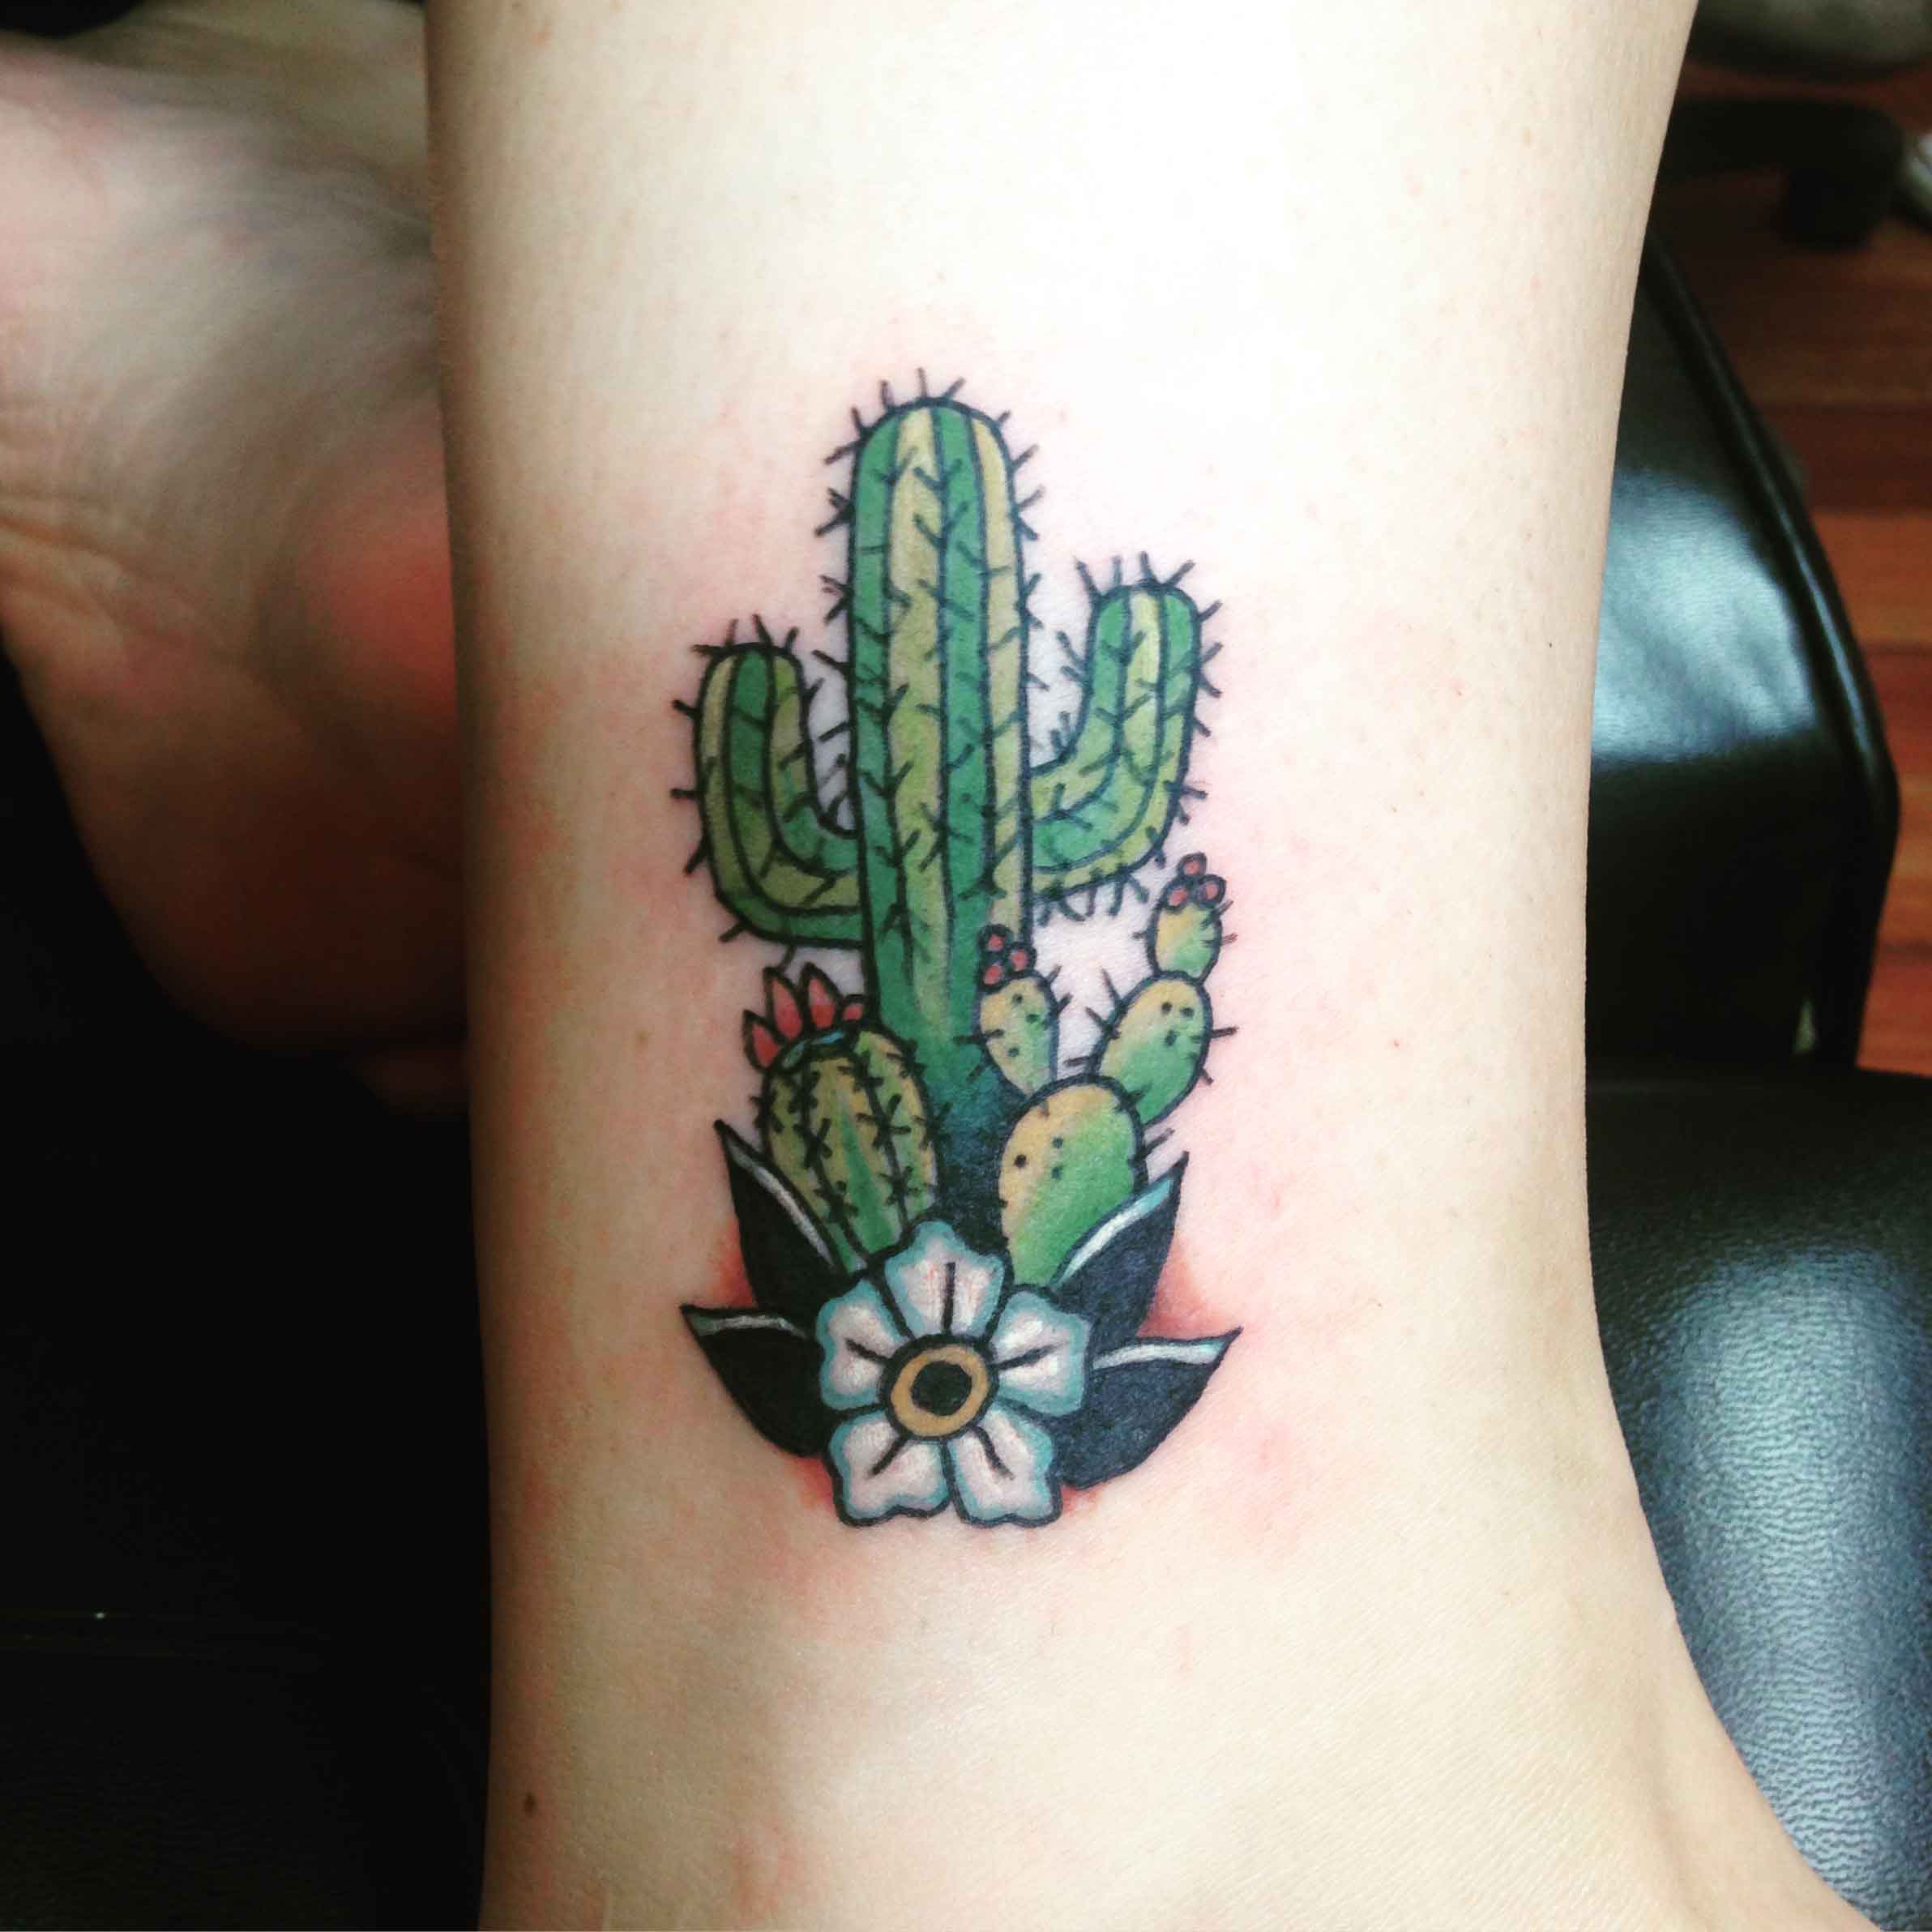 Tattoo Legend Tenerife - Sketch style cactus landscape tattoo done by  @viviana_pennati_tattoo 🌵#tenerifetattoo #sketchtattoo #tatuajes  #tattoolegend #inkaddict #besttattoos #canaryislands #tattooideas  #cactustattoo #sunsettattoo | Facebook